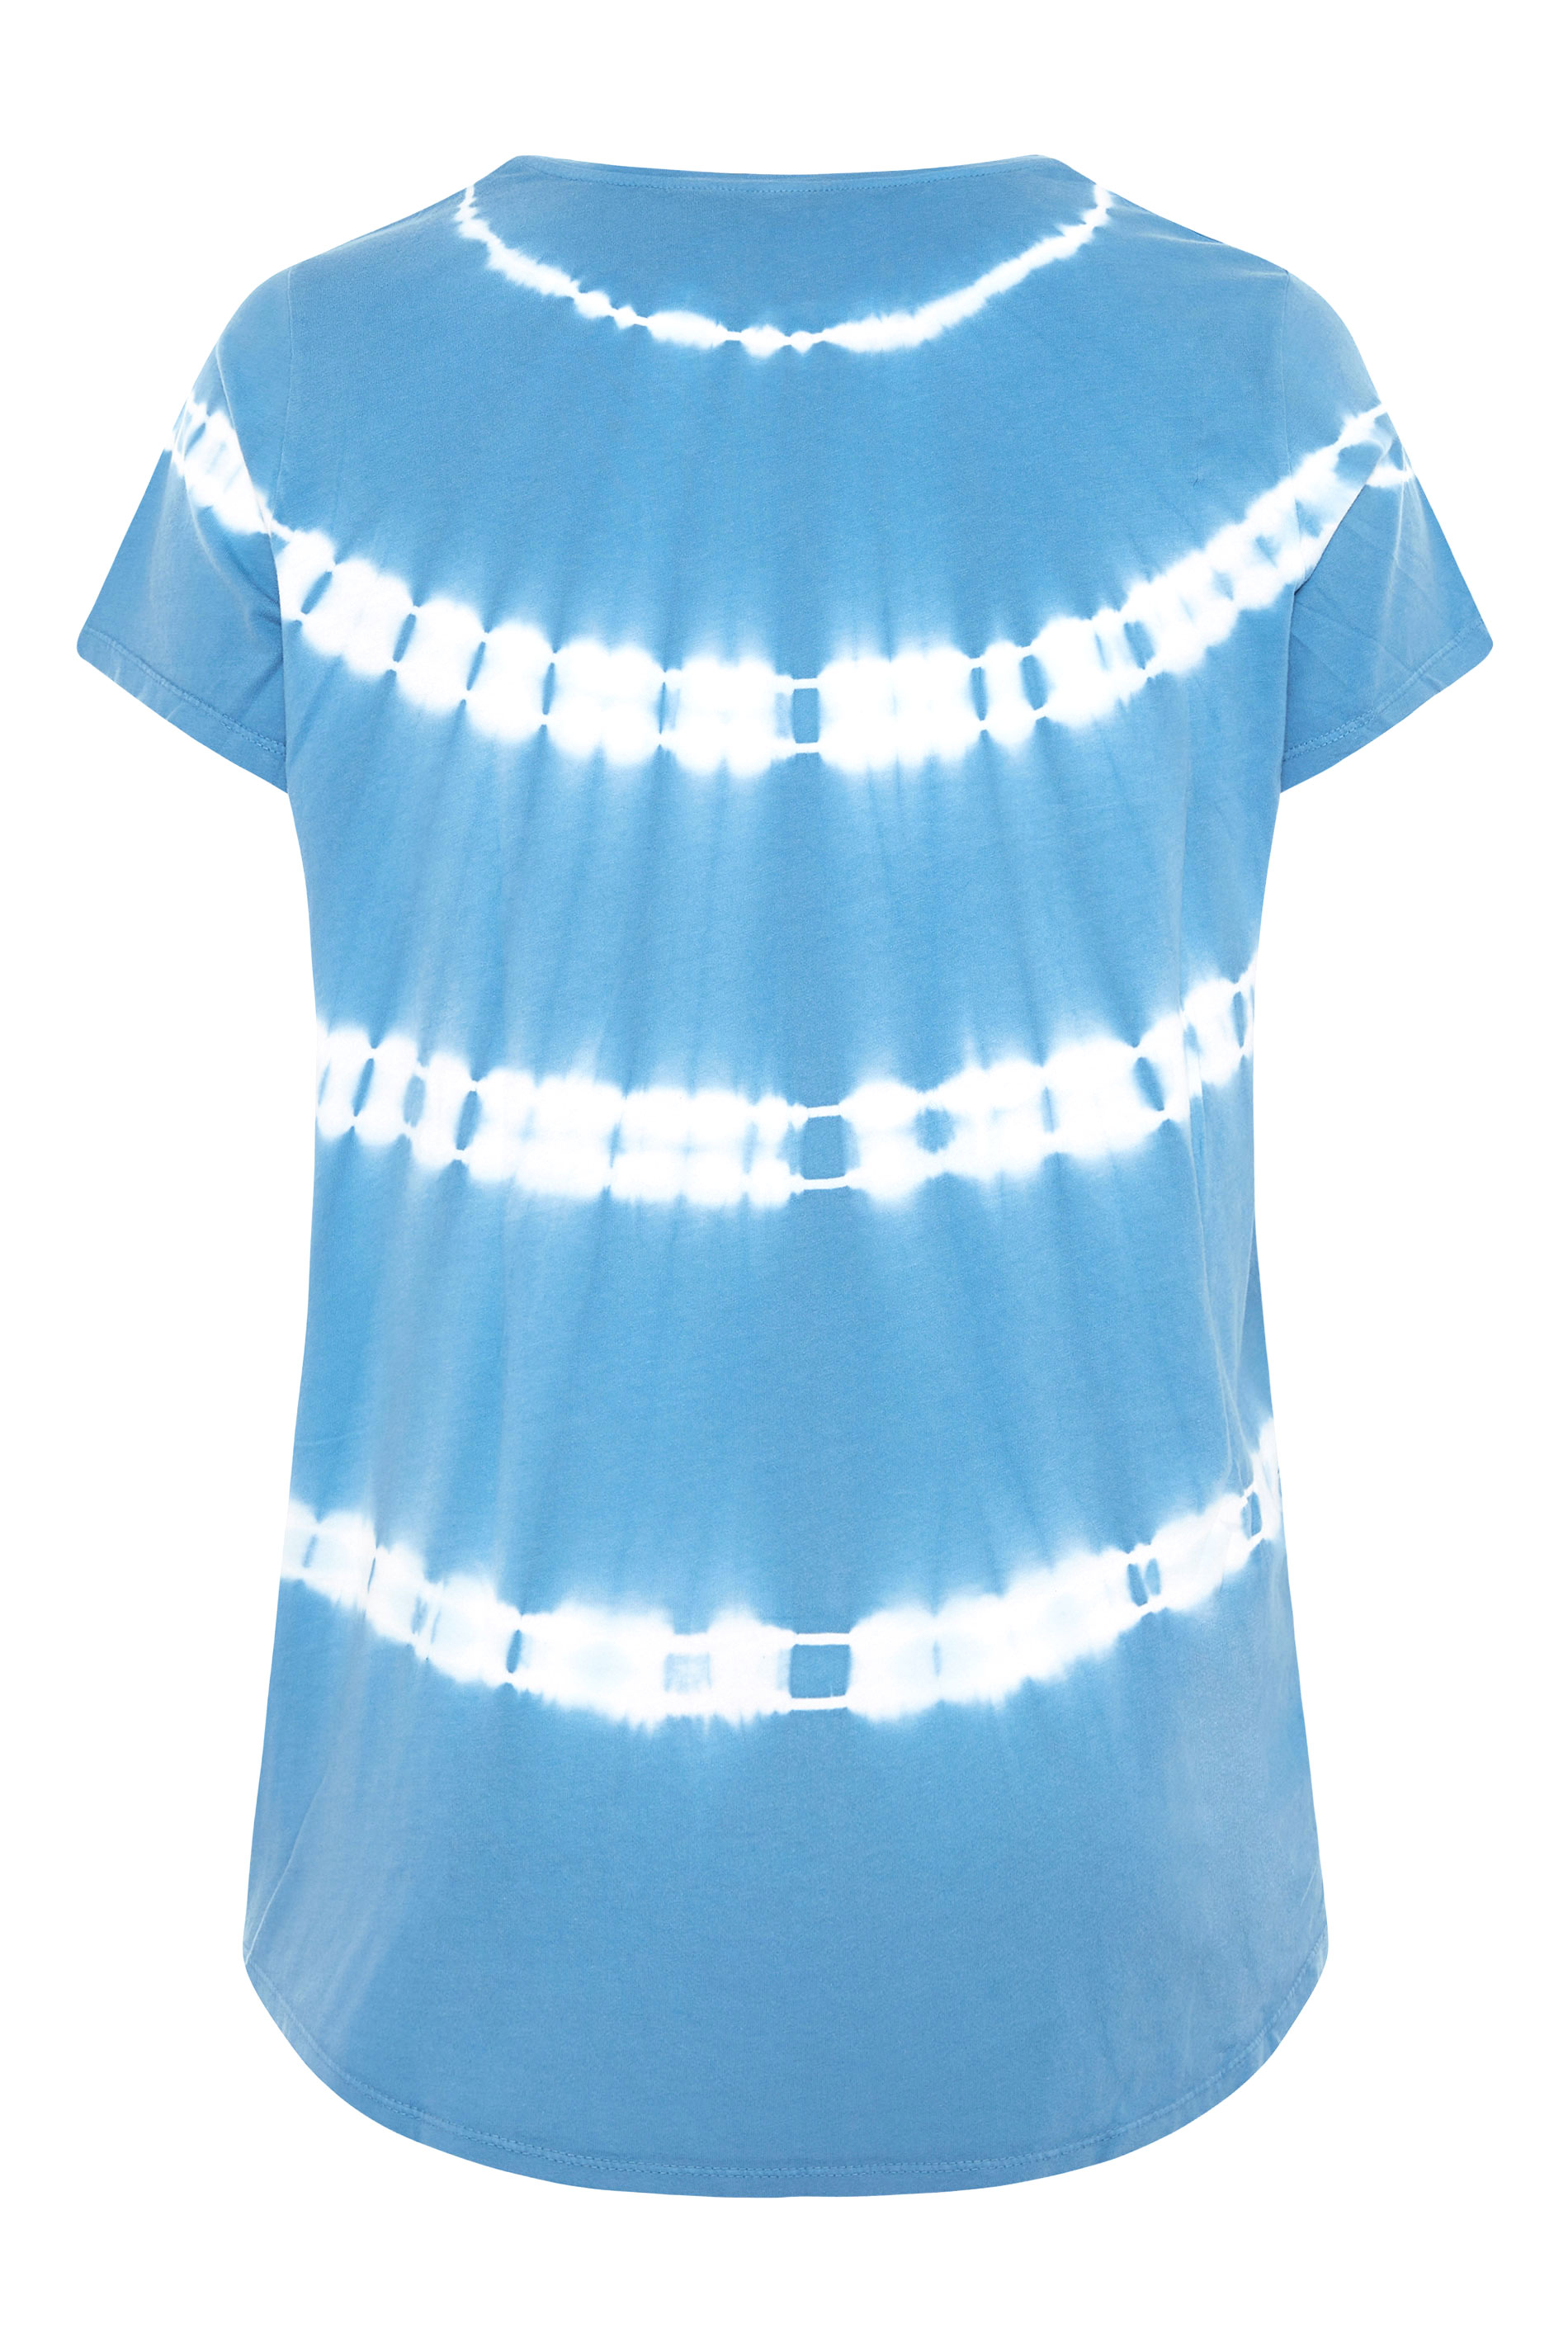 Grande taille  Tops Grande taille  T-Shirts | T-Shirt Bleu Tie & Dye - BU84381